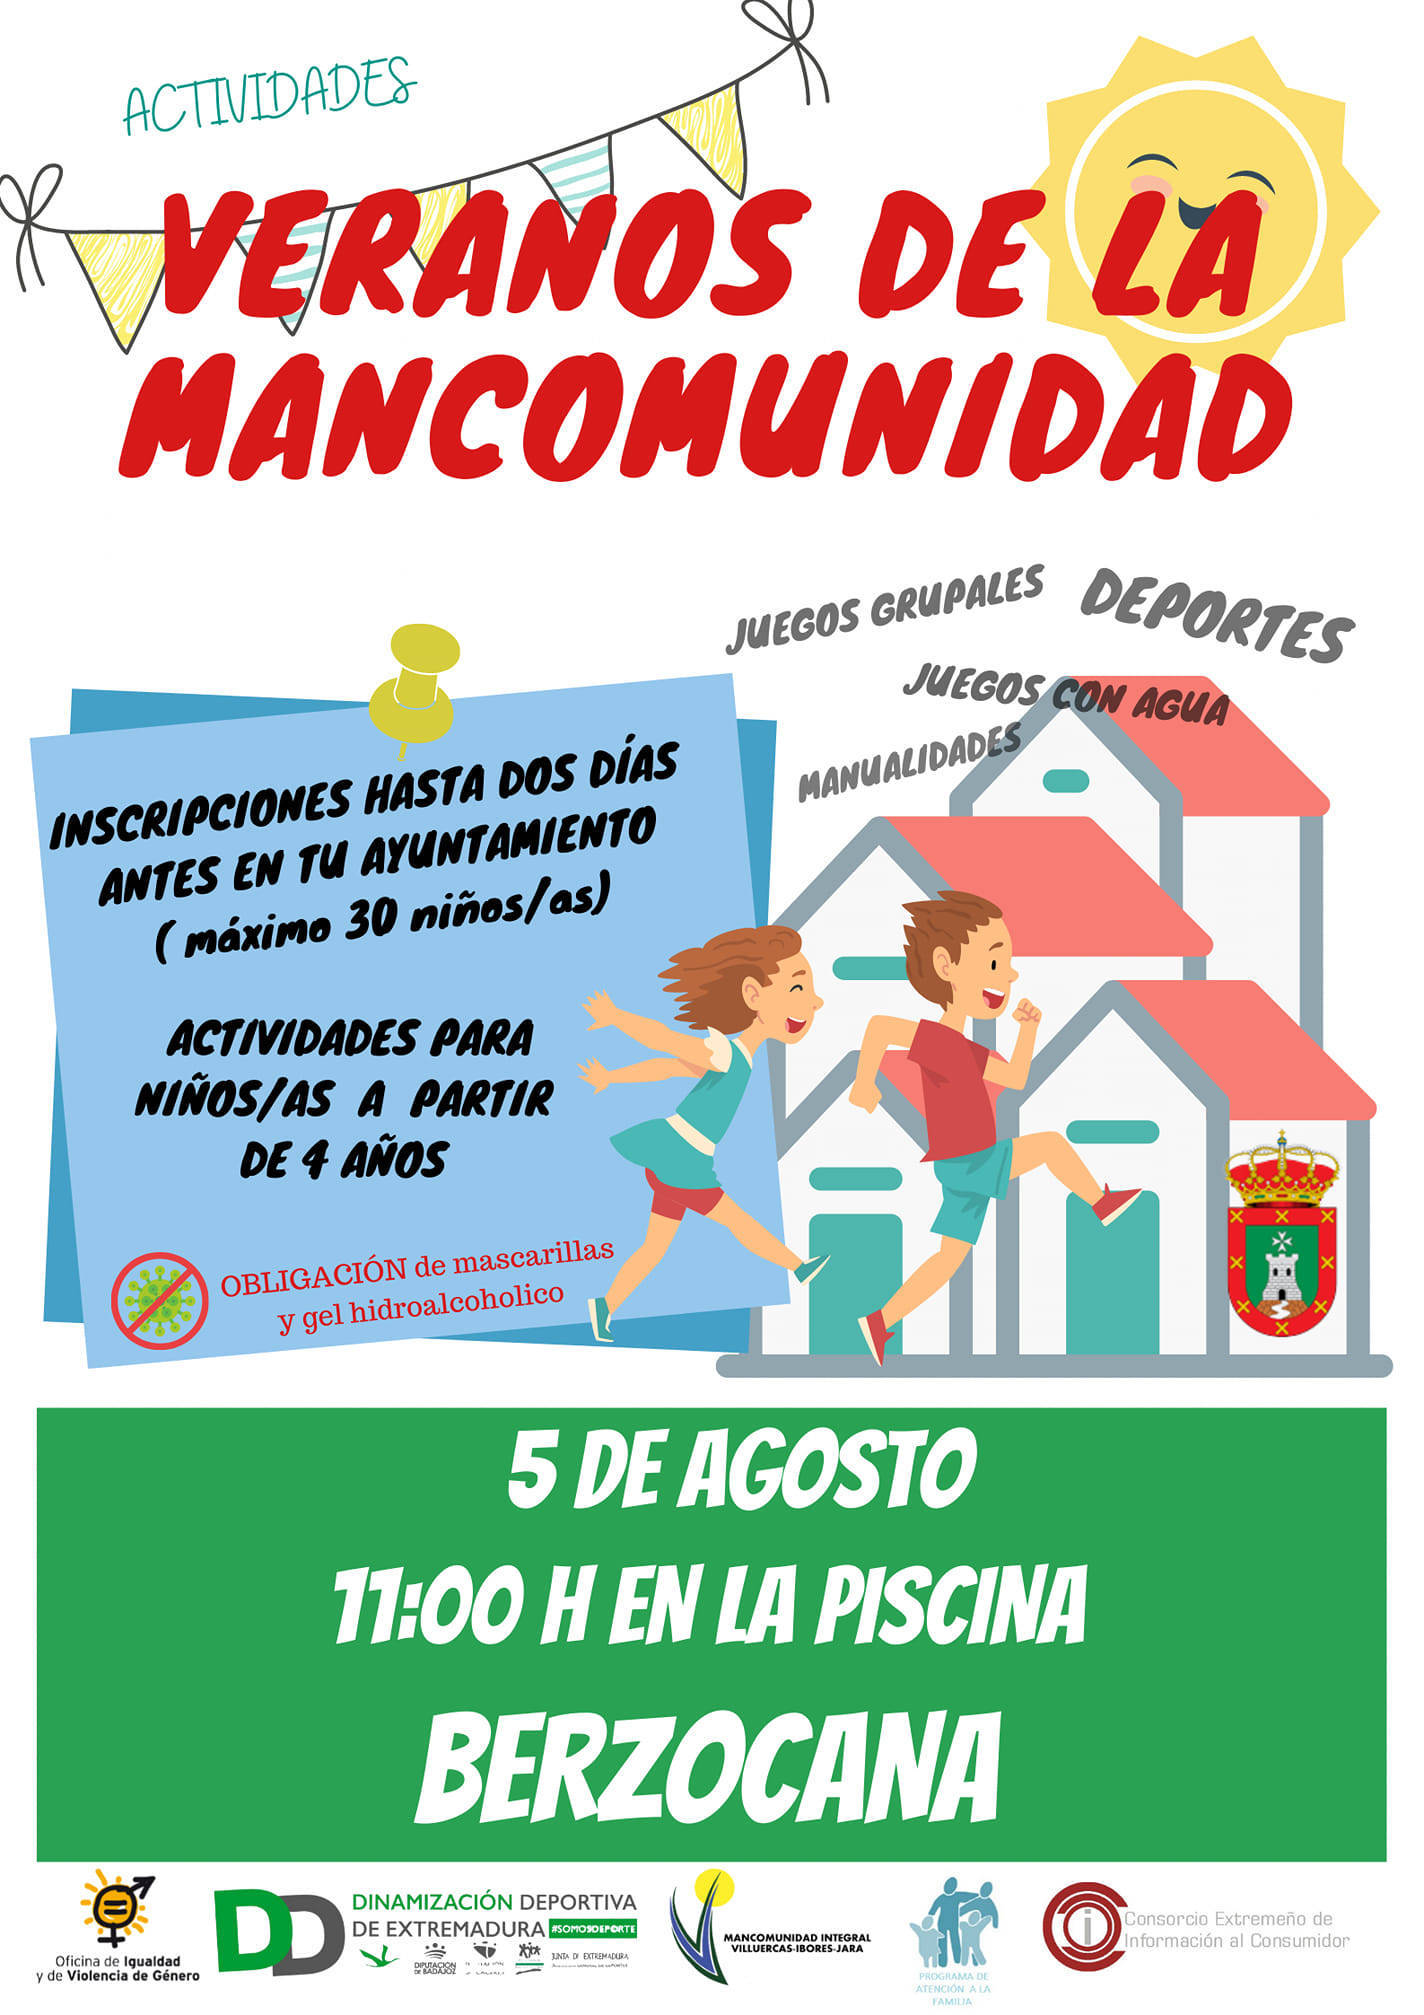 Veranos de la Mancomunidad (2021) - Berzocana (Cáceres)